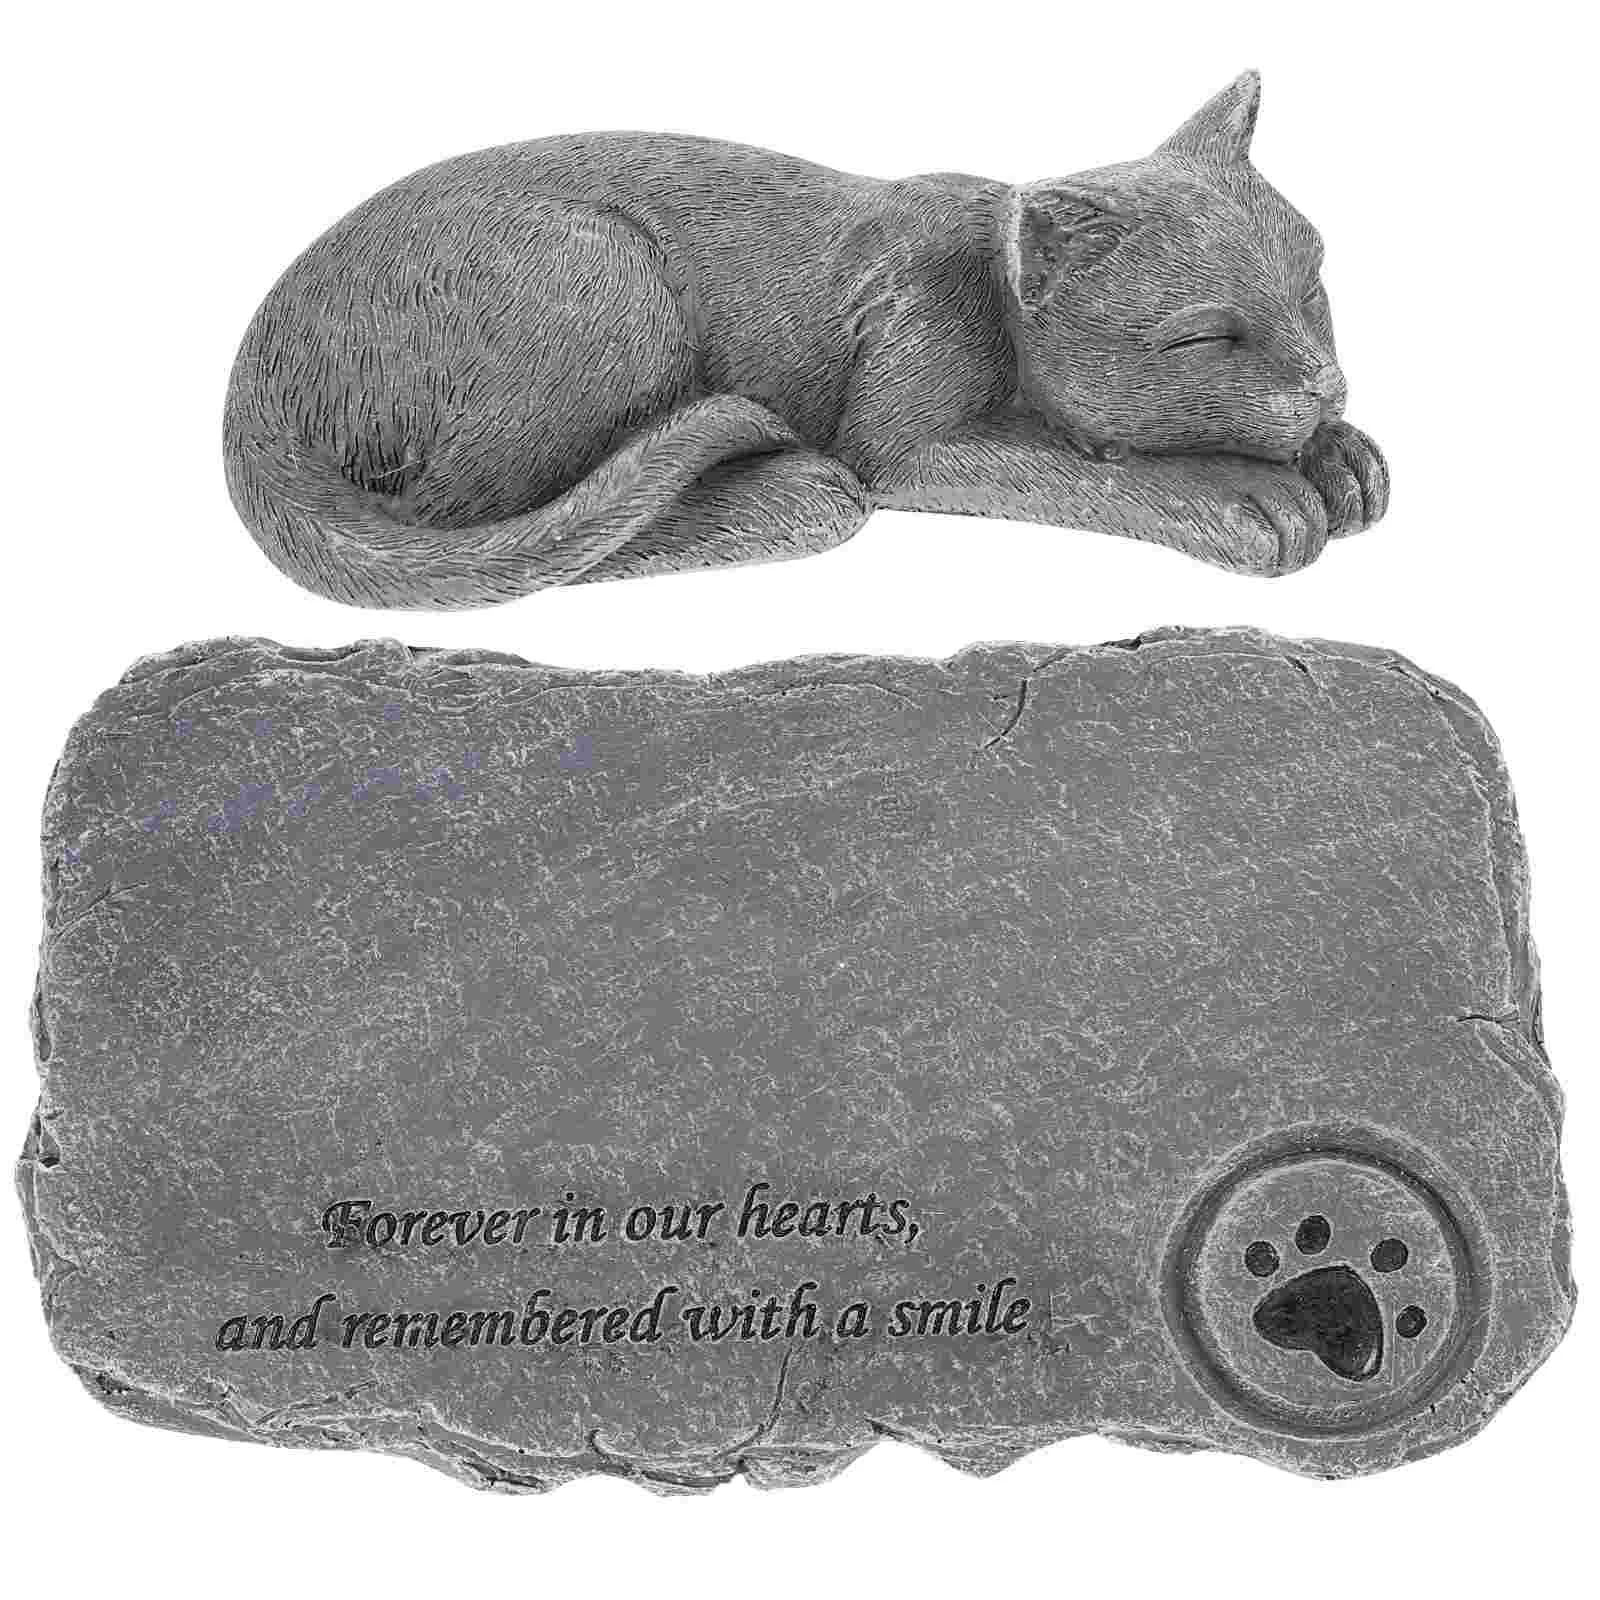 

Kitten Dog Ornament Animal Statute Headstones Graves Pet Remembrance Memorial Gift Tombstones Garden Cat Resin Statue Gifts